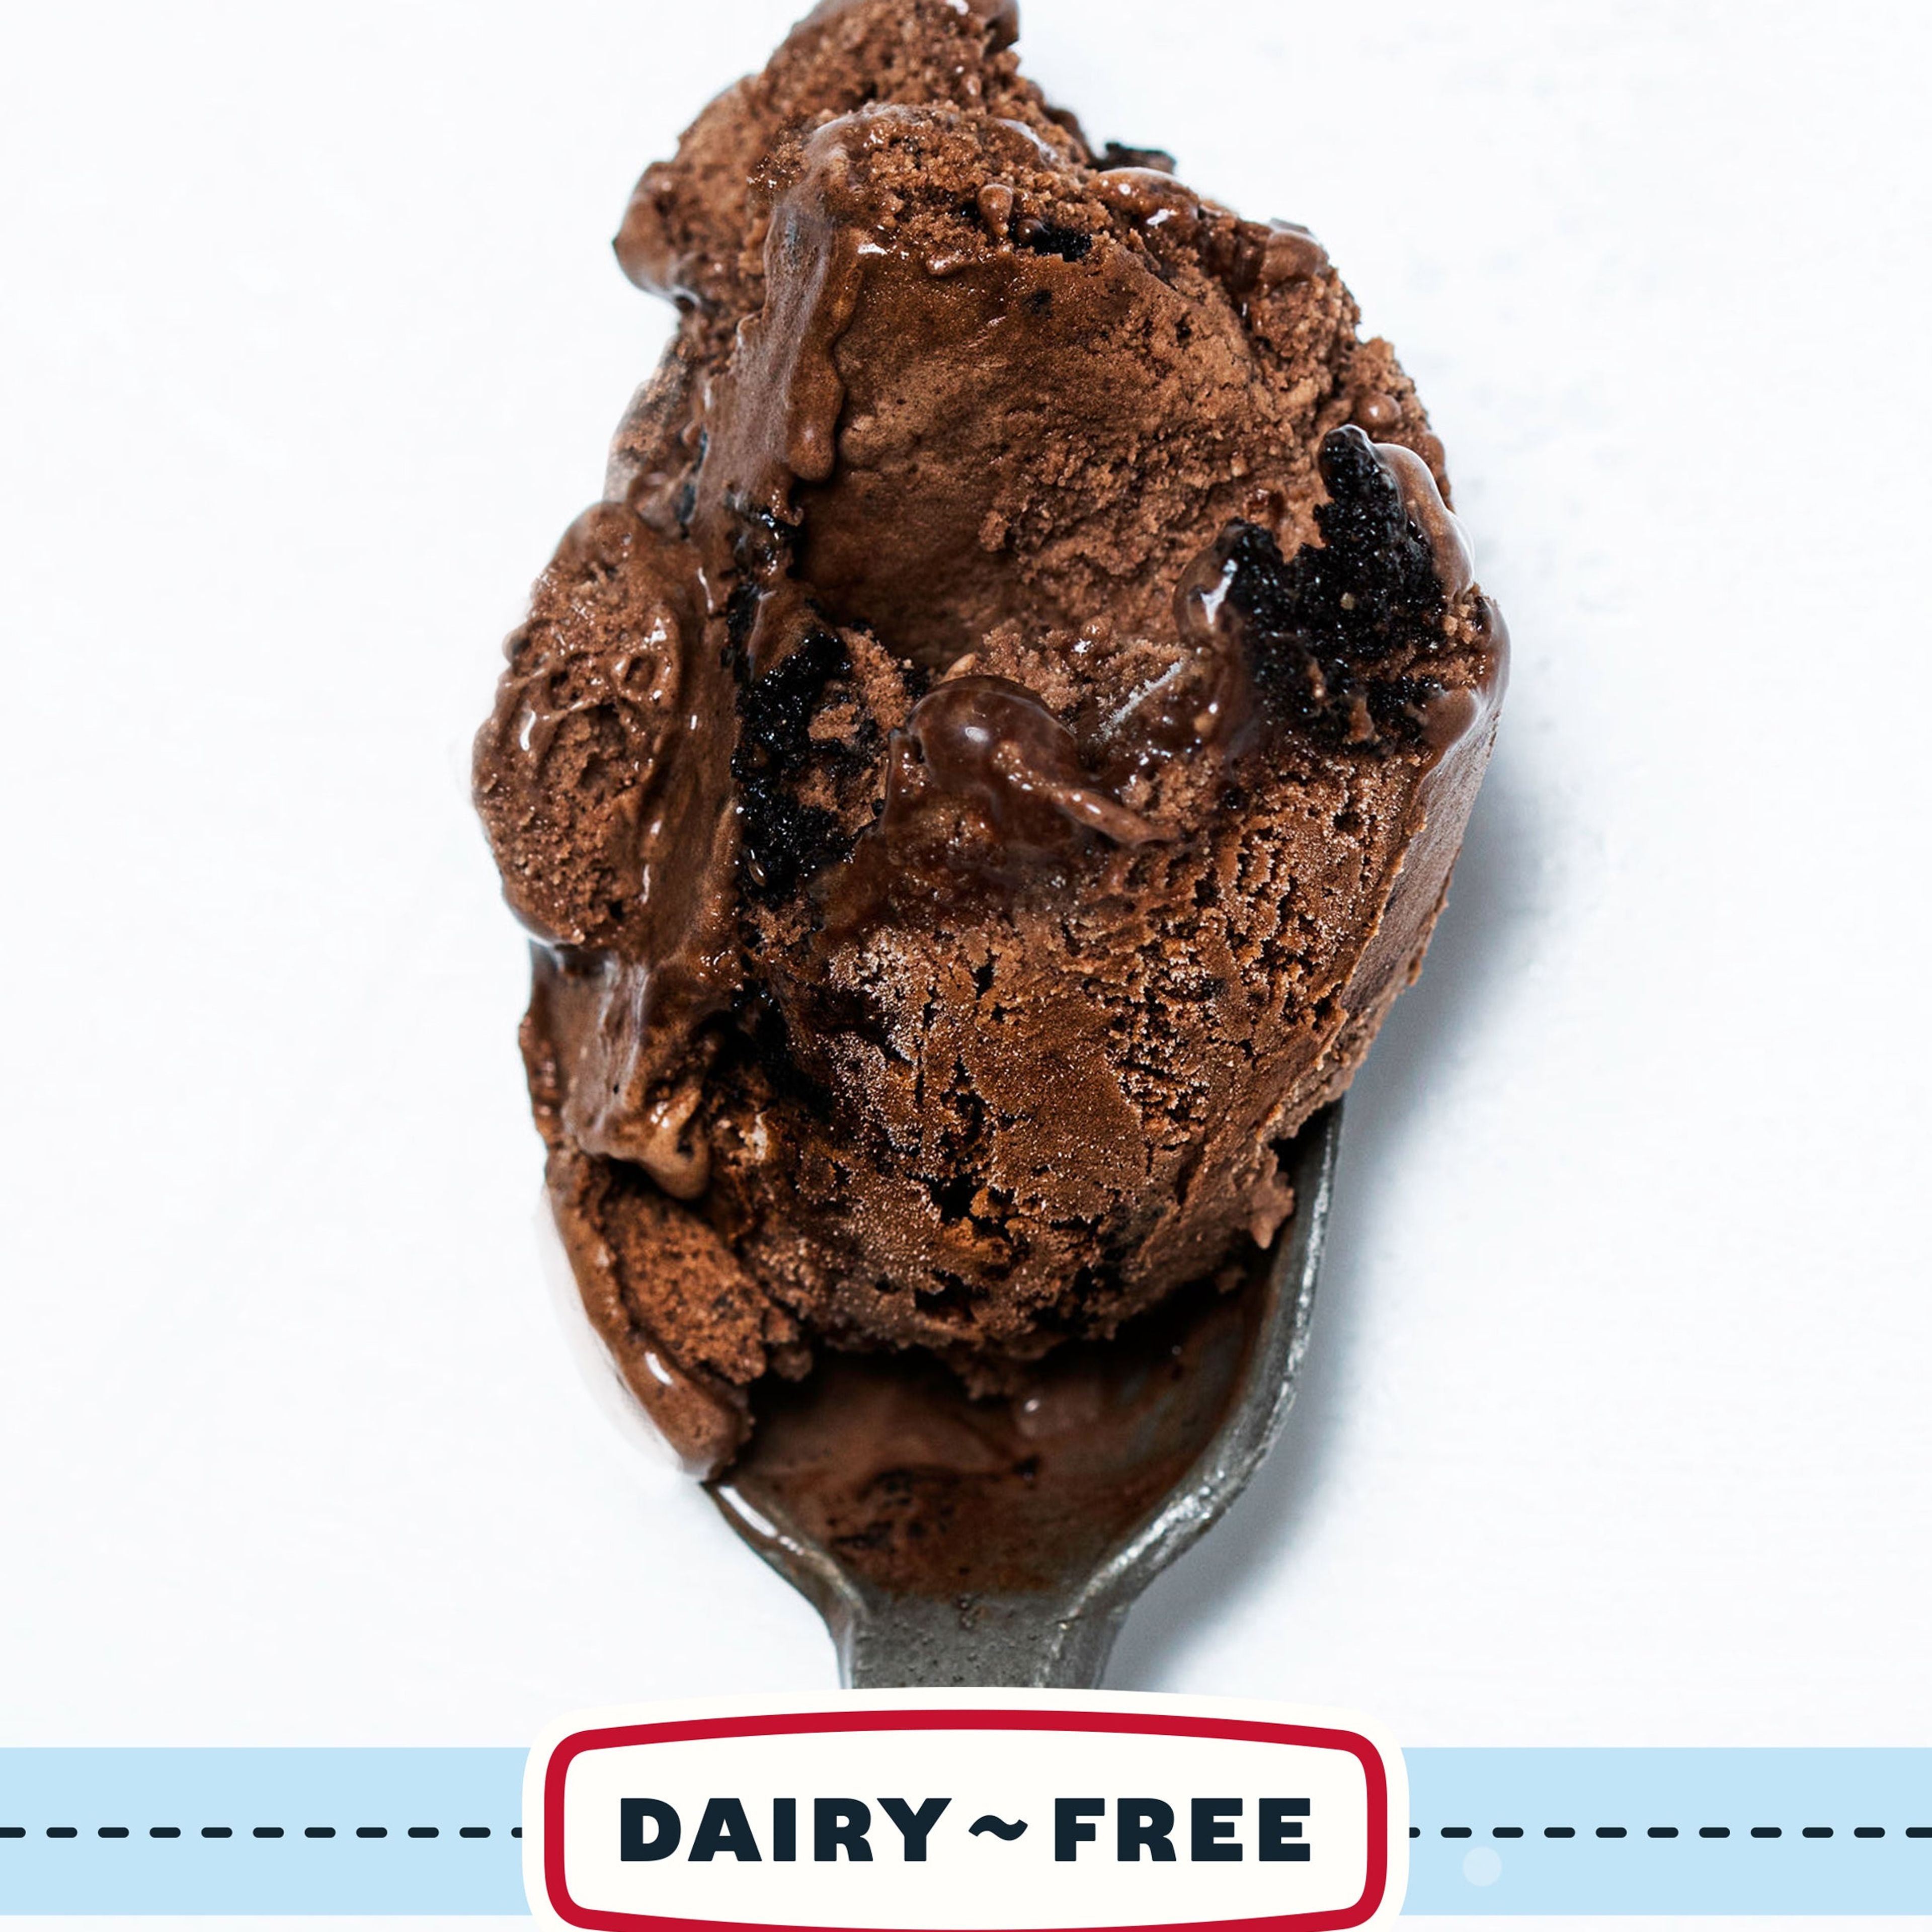 Dairy-Free Chocolate Fudge & Cookies